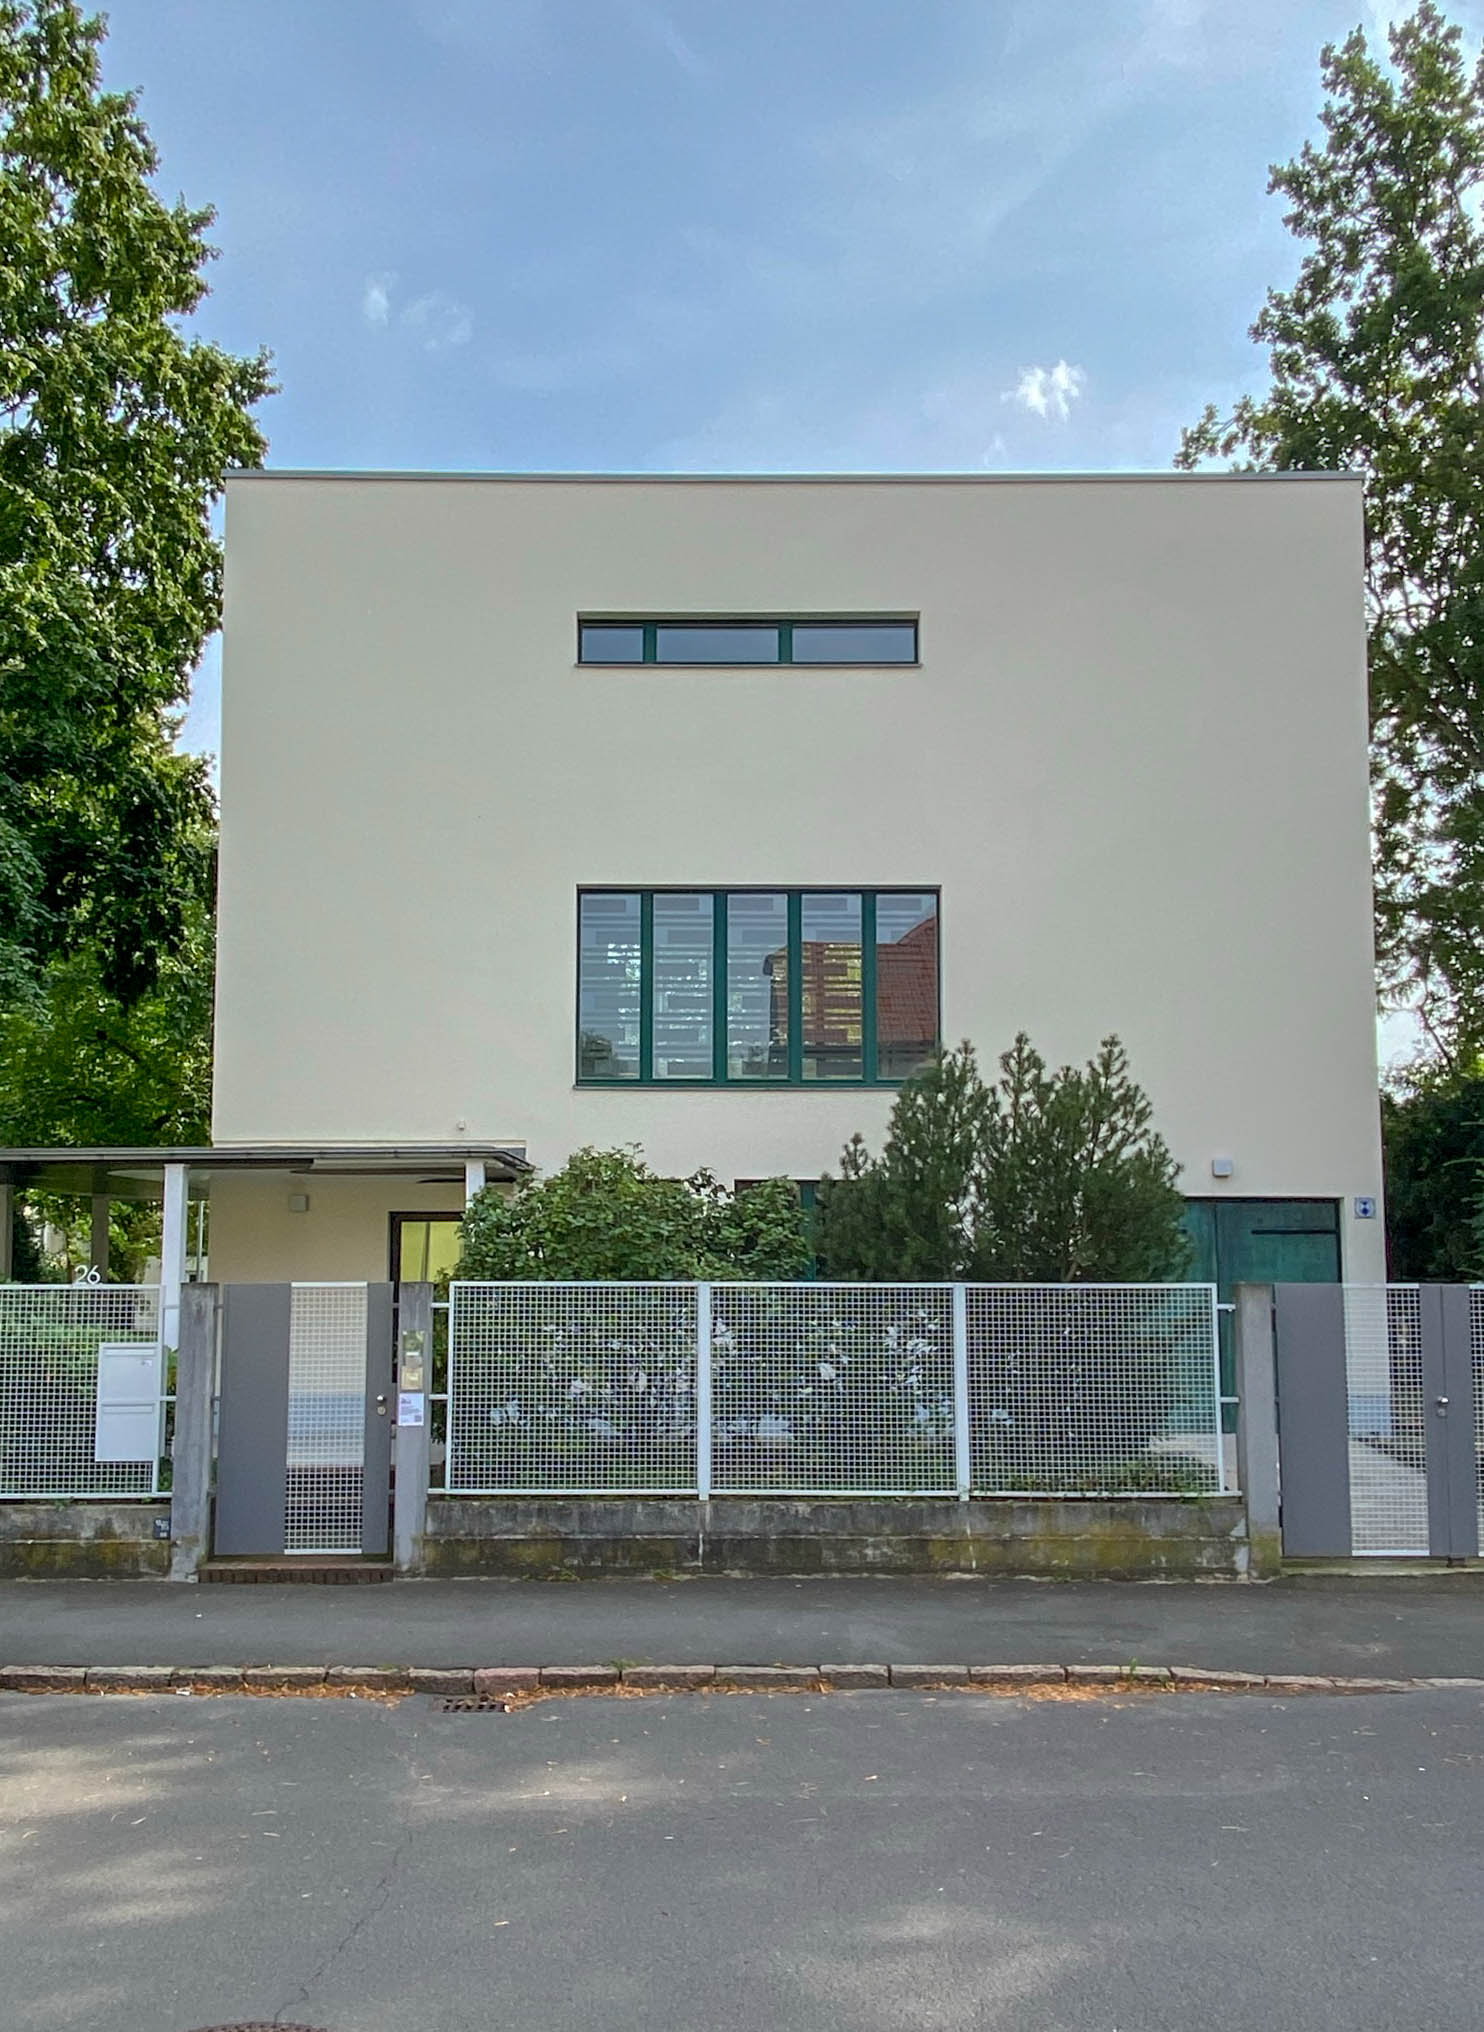 Haus Rabe, 1929-1930. Architekt: Adolf Rading. Foto: Daniela Christmann